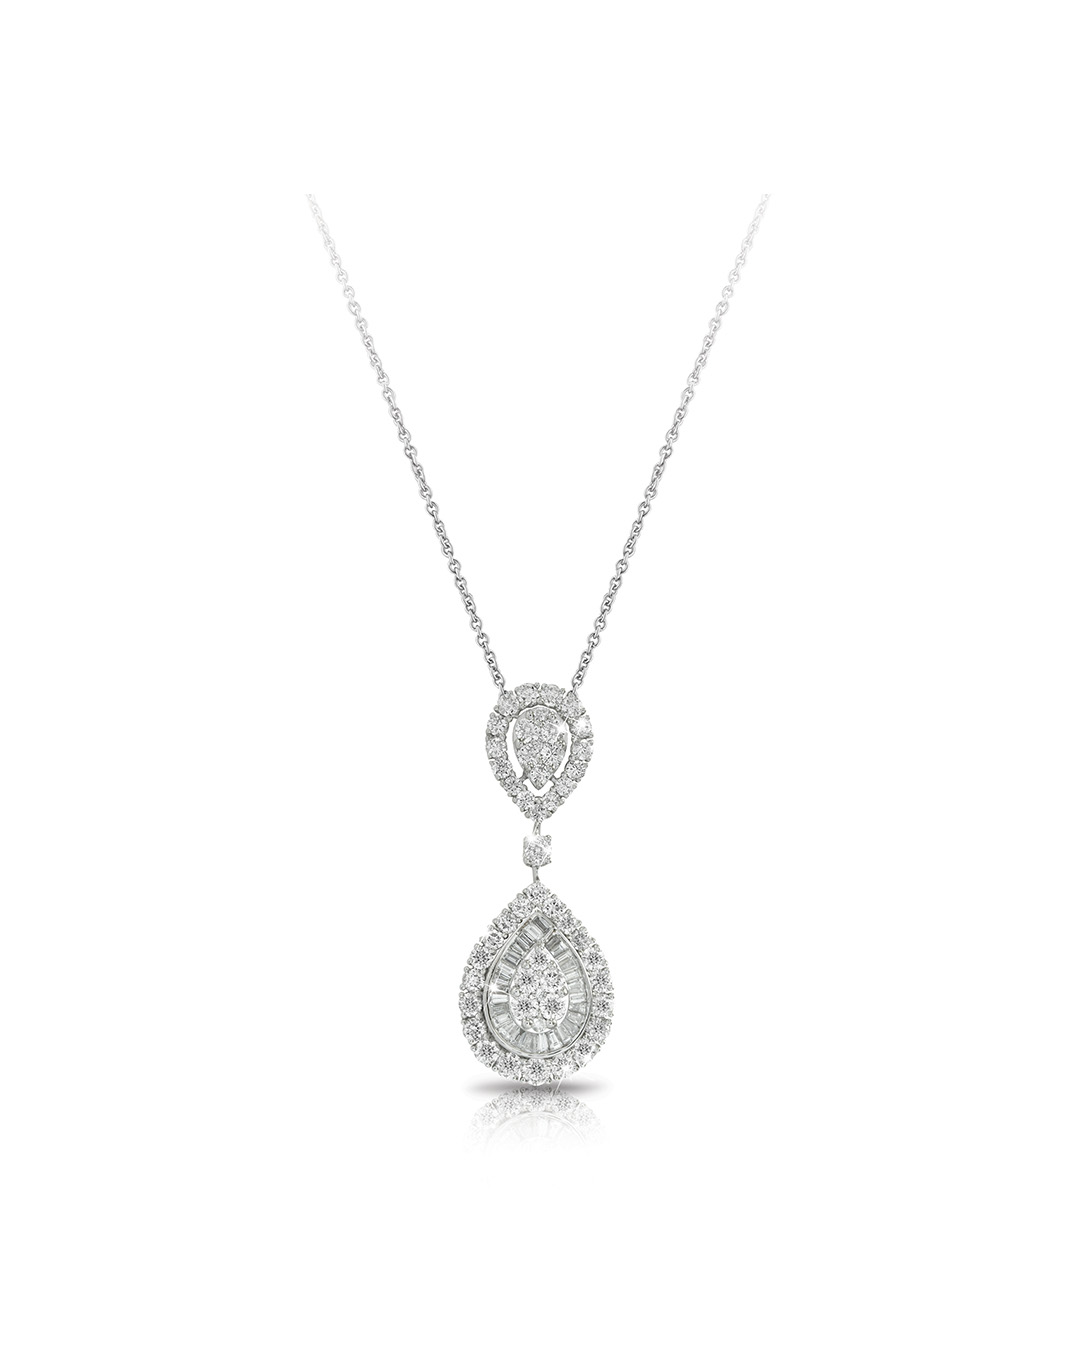 diamond necklace with pendant